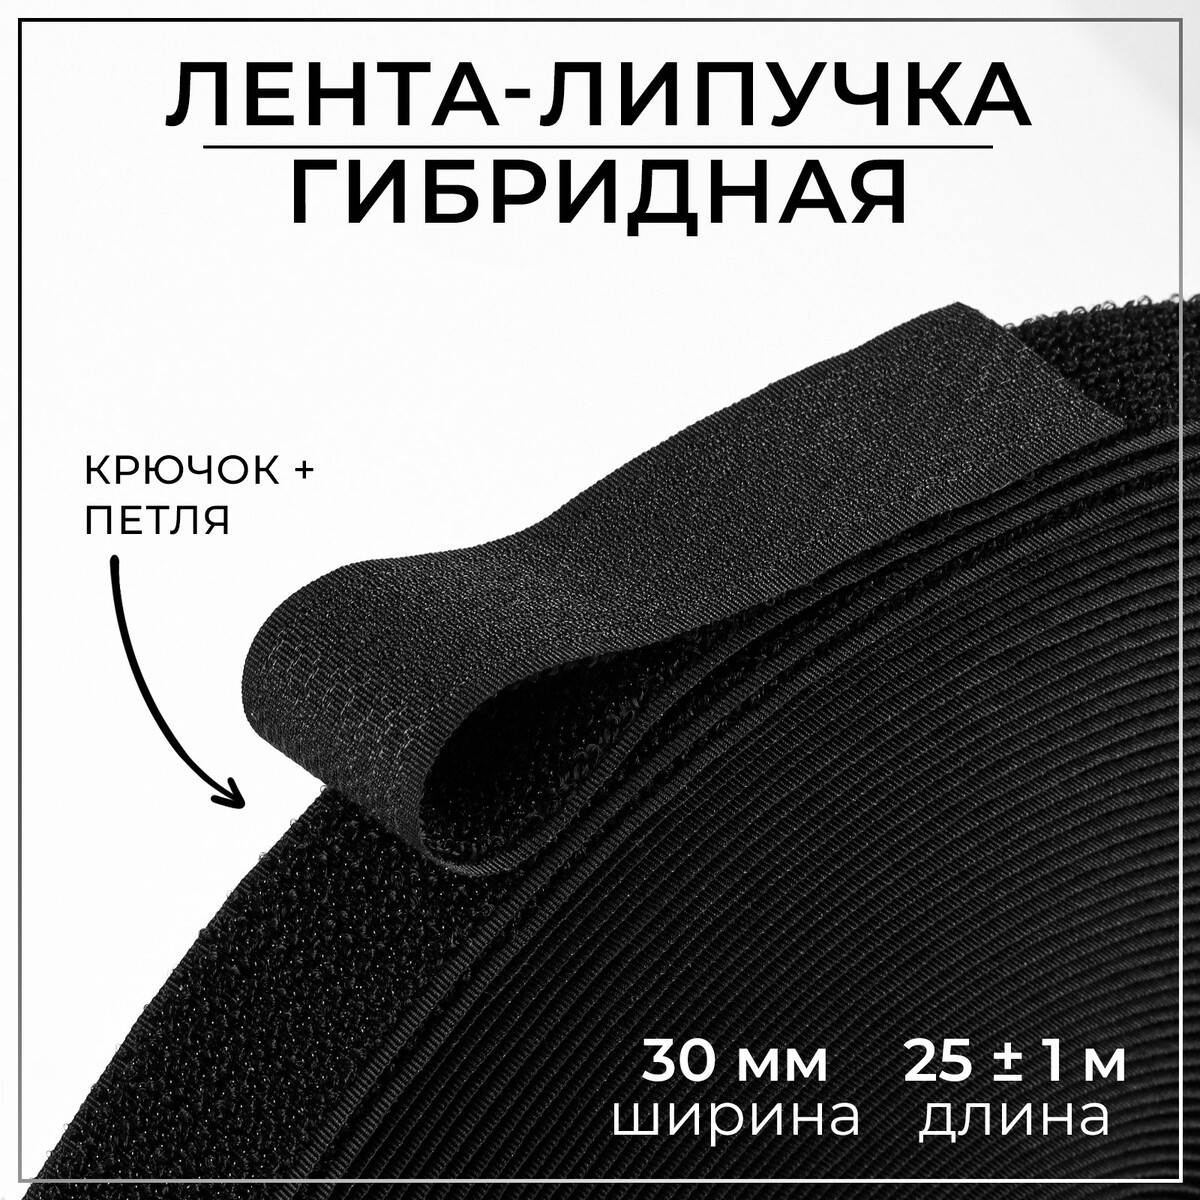 Липучка гибридная, 30 мм × 25 ± 1 м, цвет черный липучка гибридная 20 мм × 25 ± 1 м